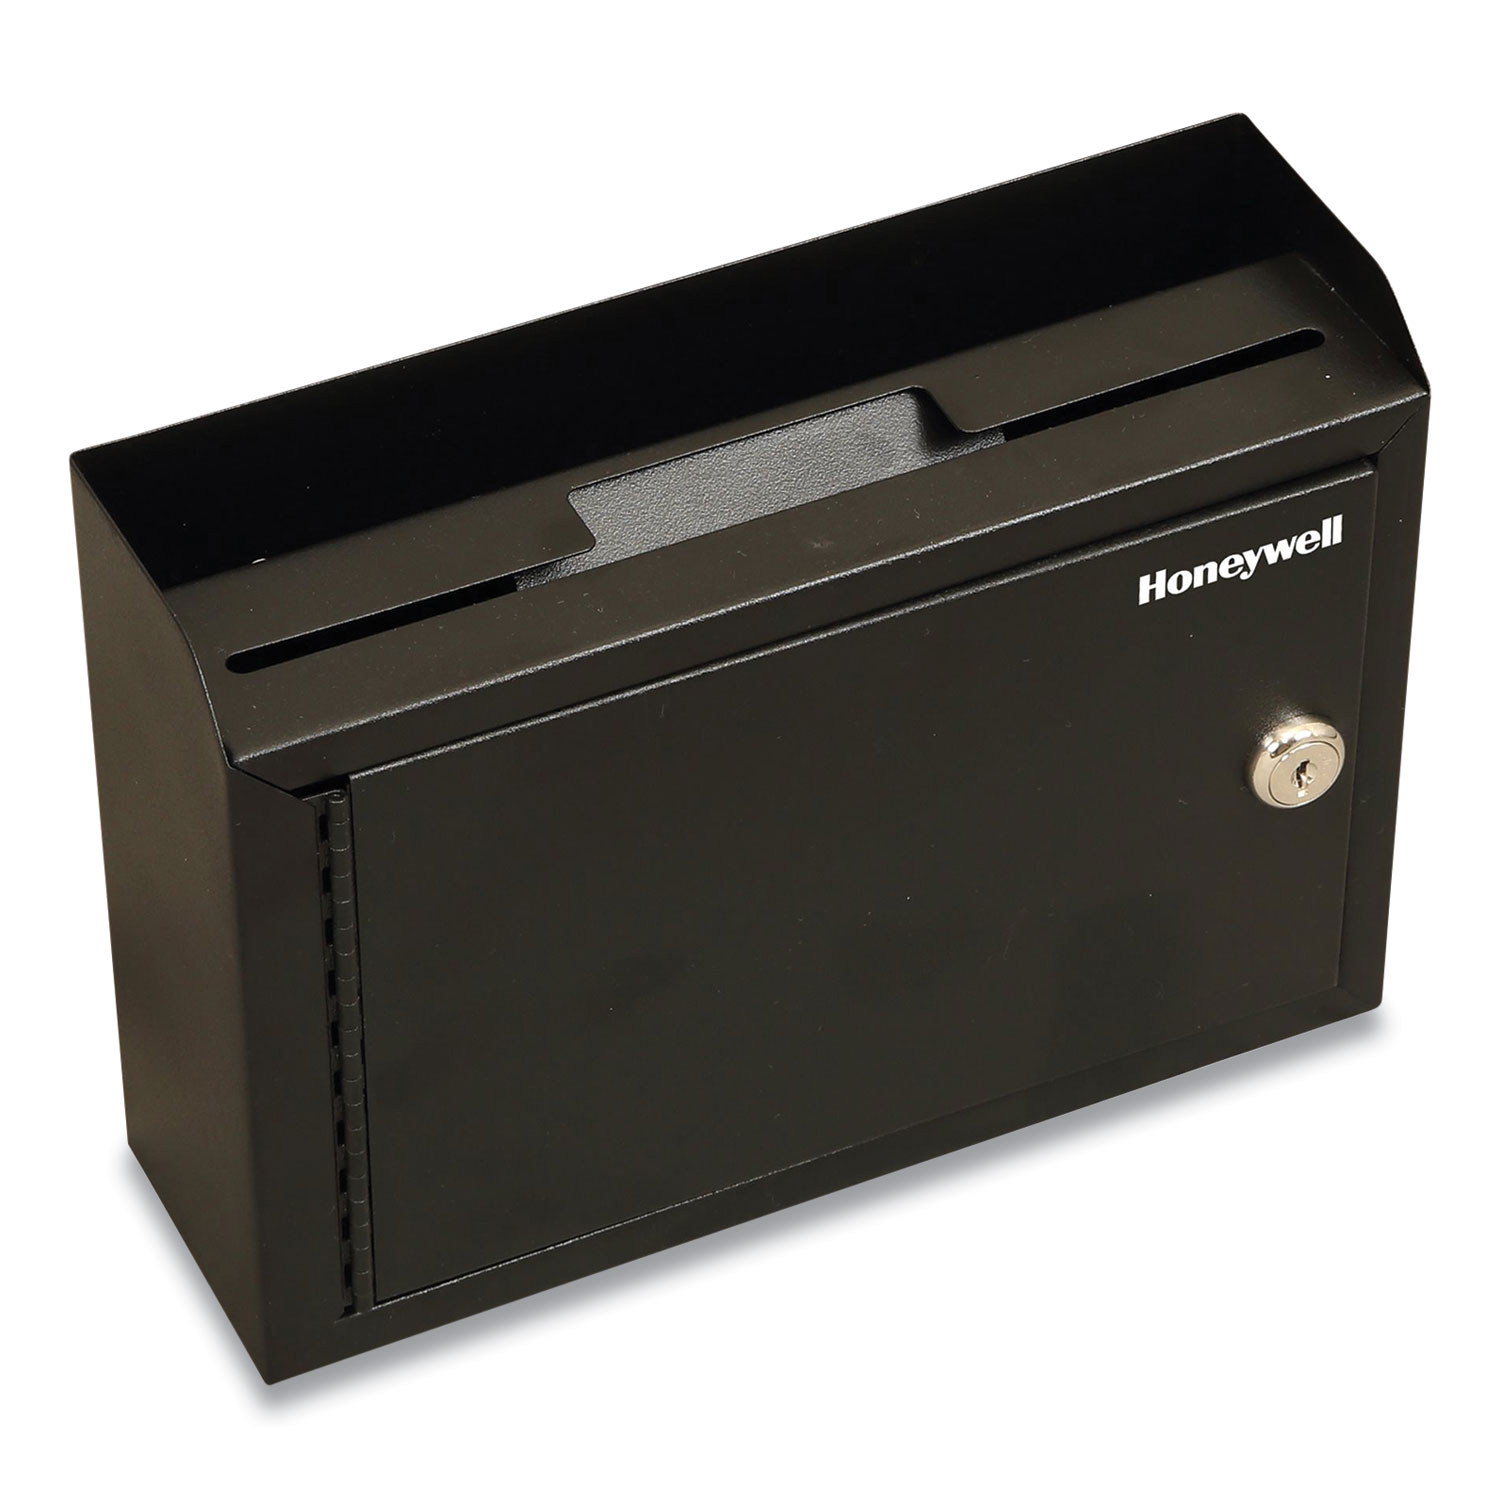  Honeywell 6204 Drop Box Safe with Keys, 9.9 x 3 x 7.1, 0.12 cu ft, Black (HWL2106798) 